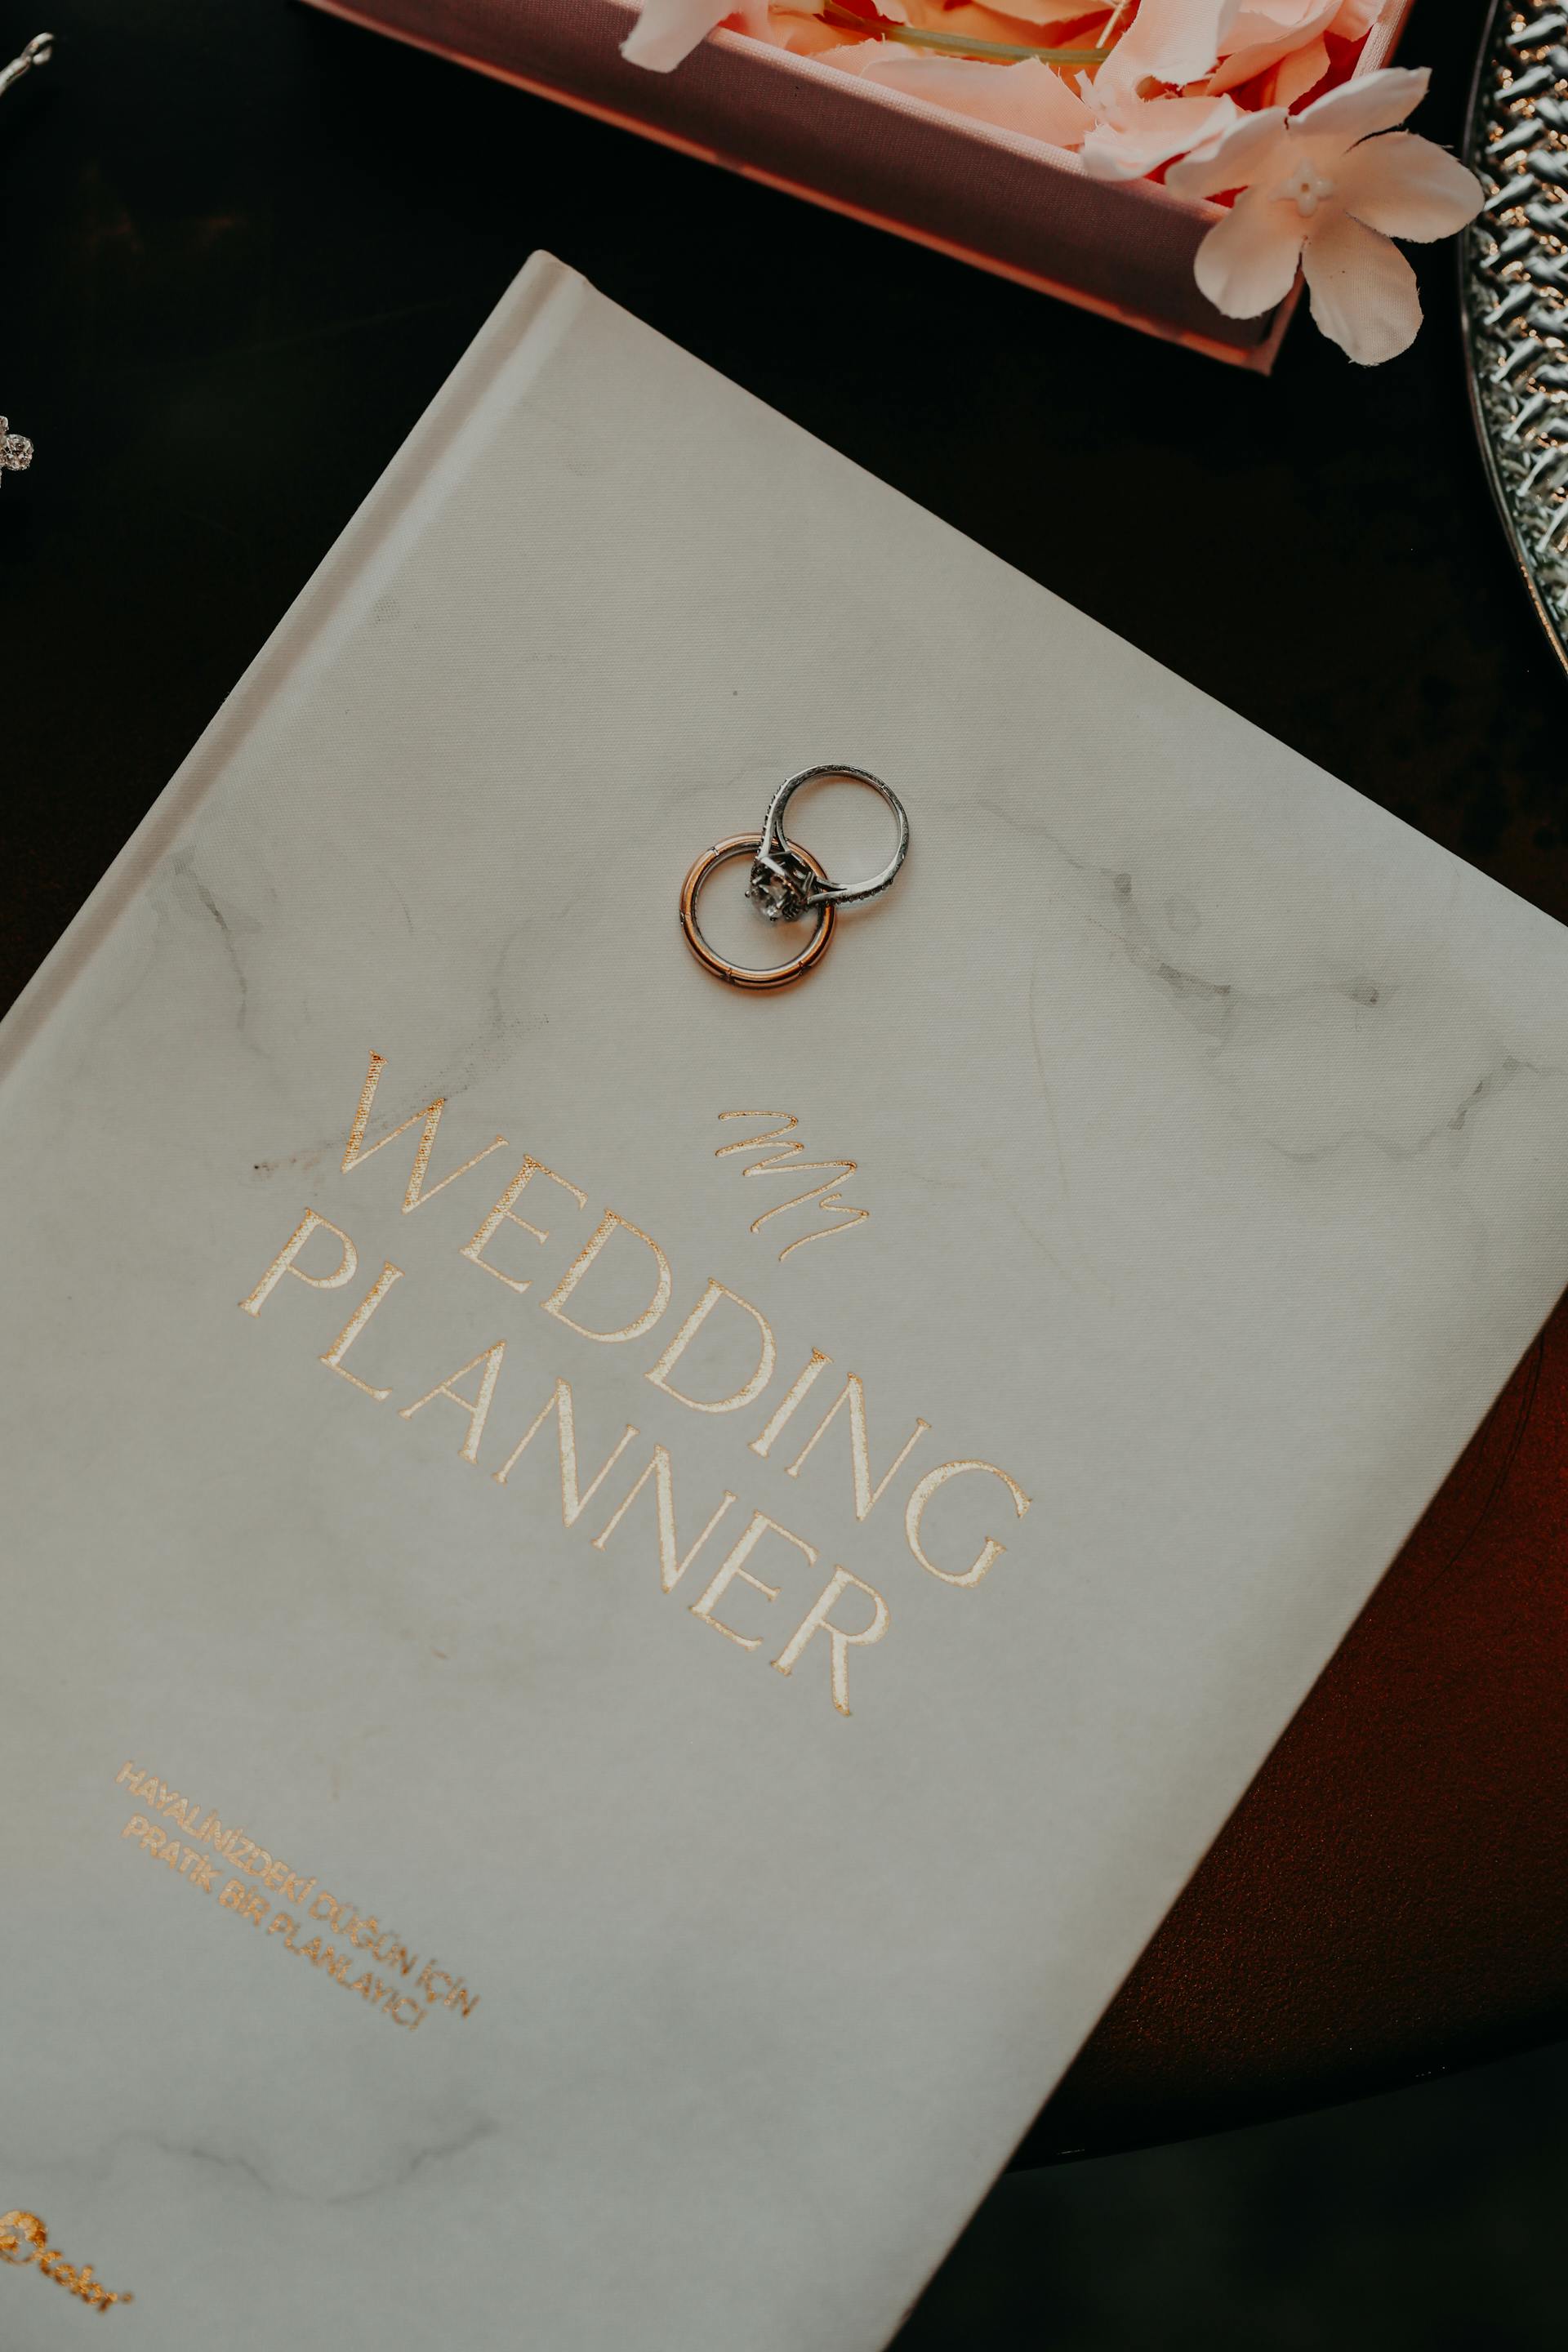 Rings on a wedding planner | Source: Pexels